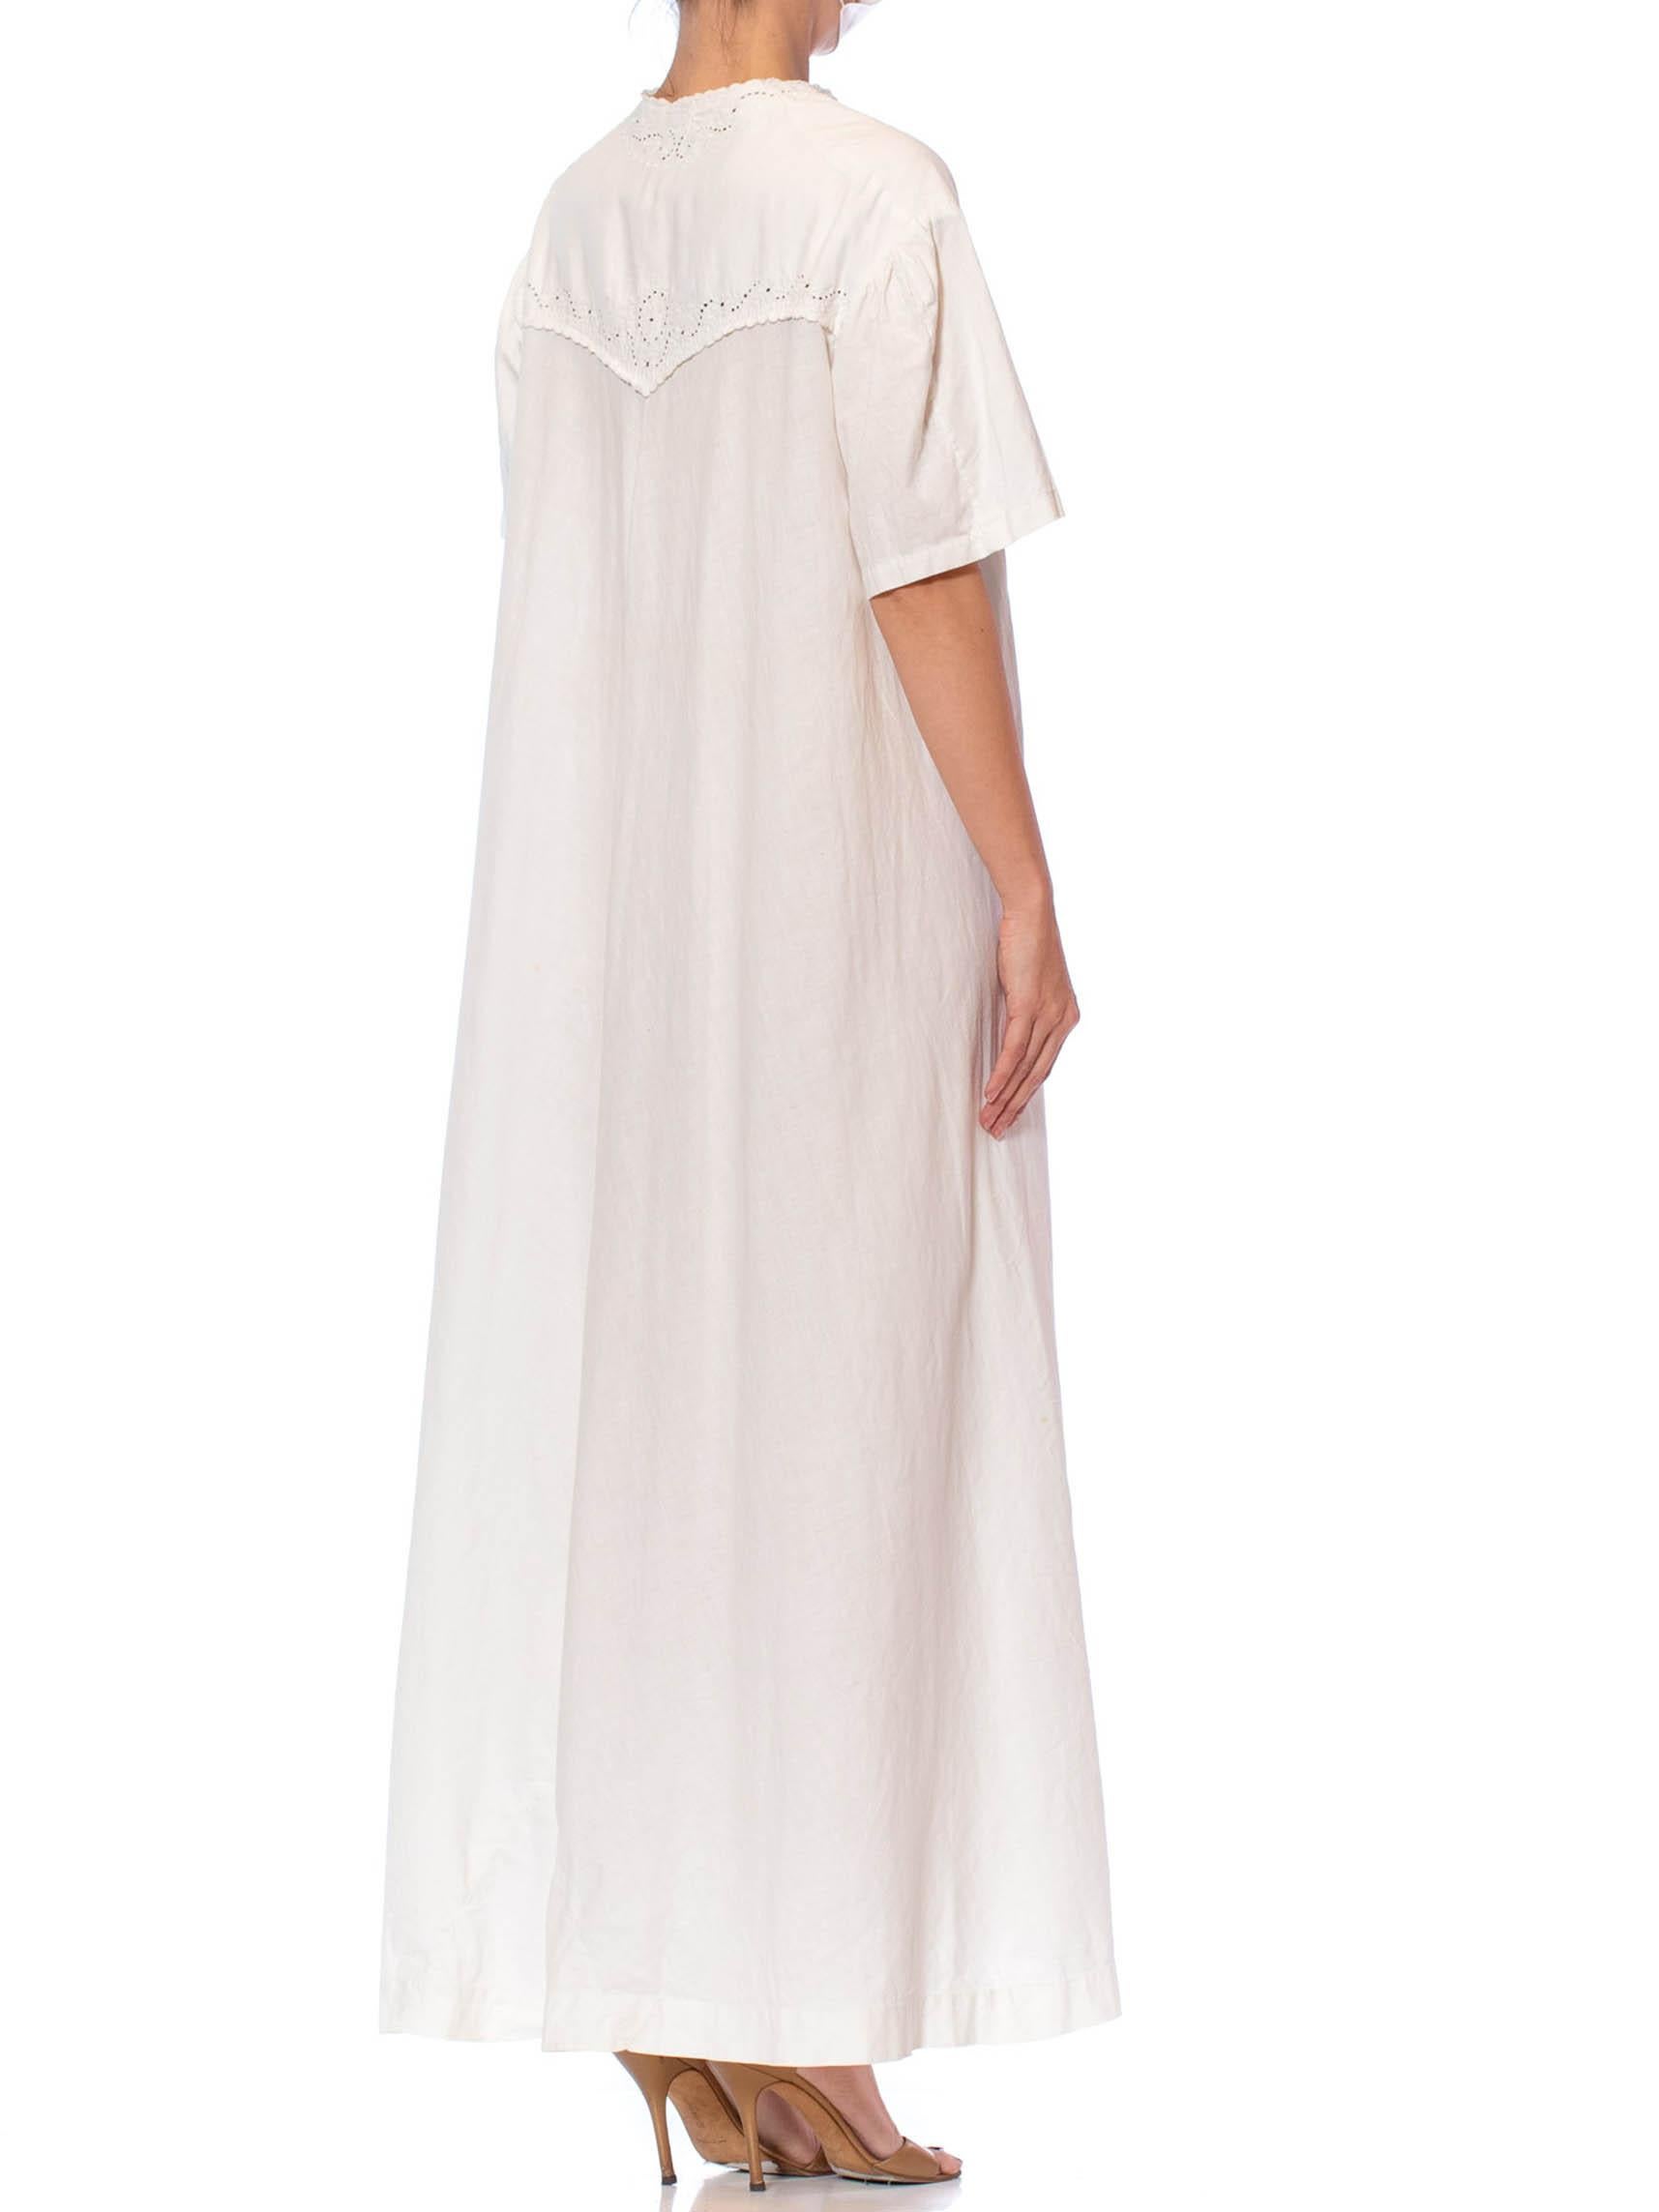 irish linen nightgowns